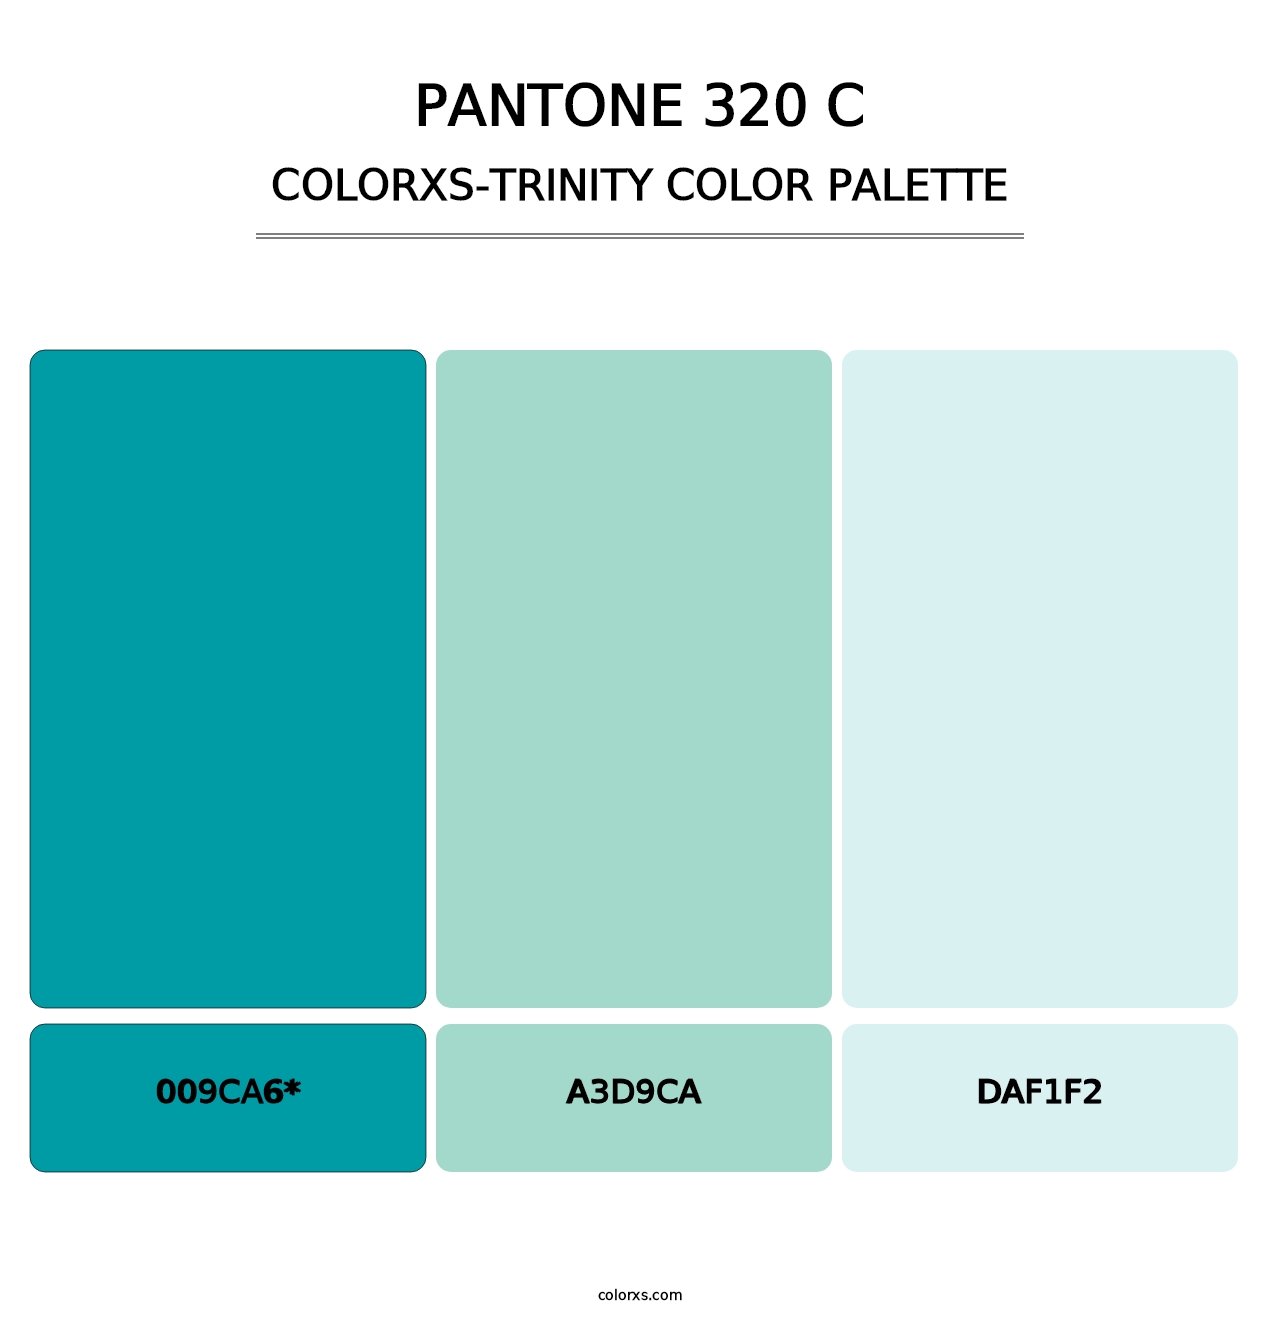 PANTONE 320 C - Colorxs Trinity Palette